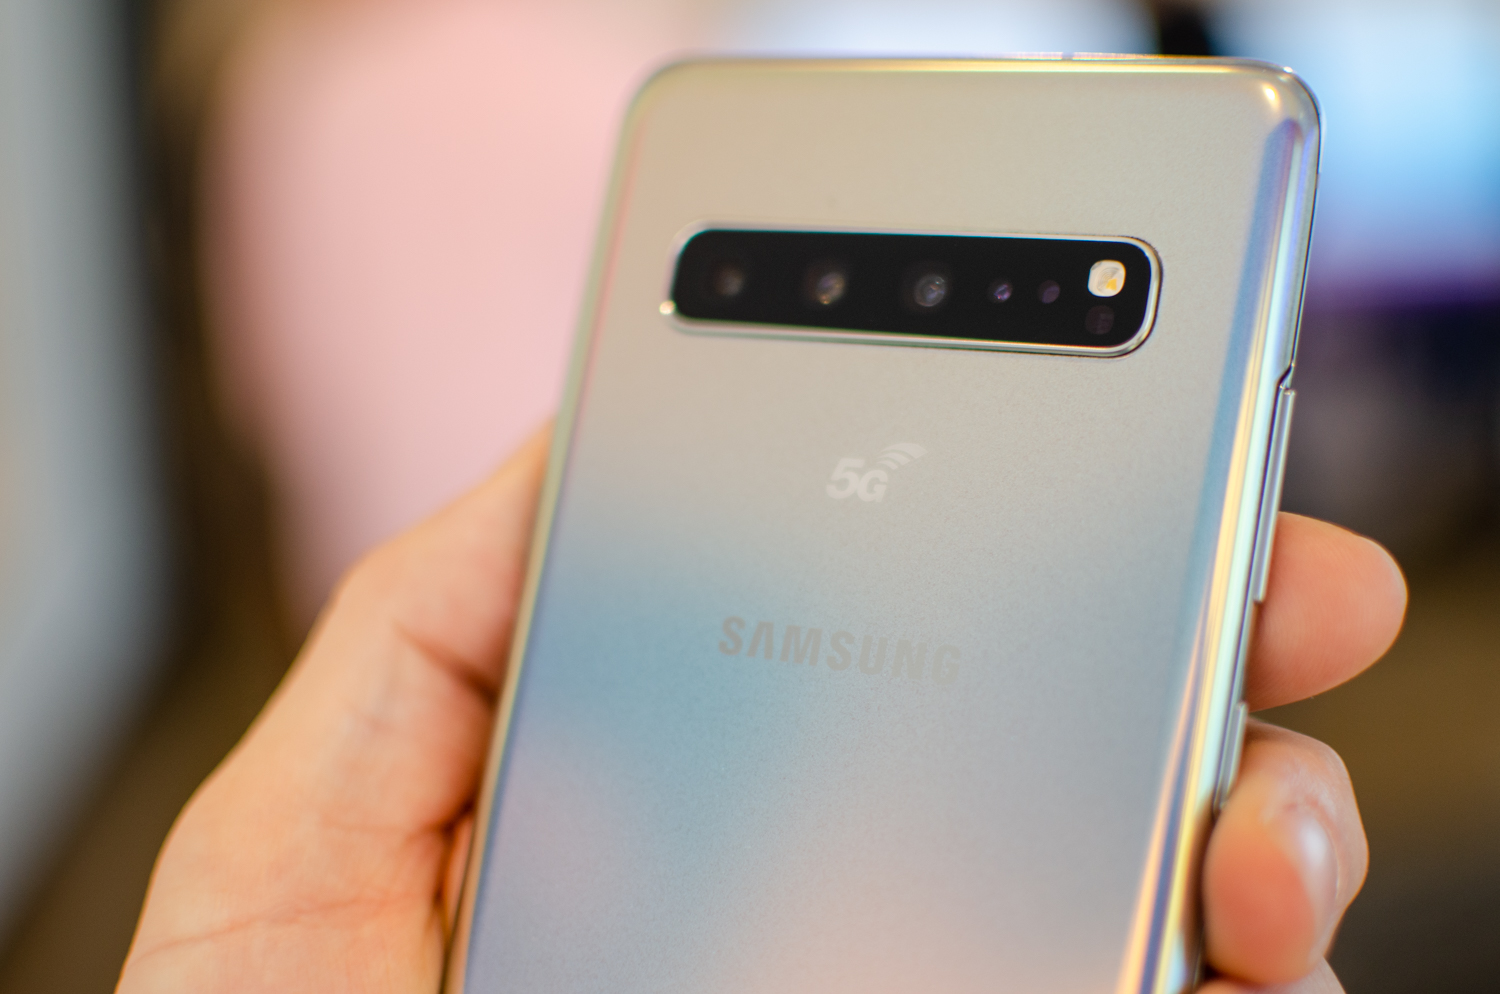 Samsung Galaxy s10 5g hands-on